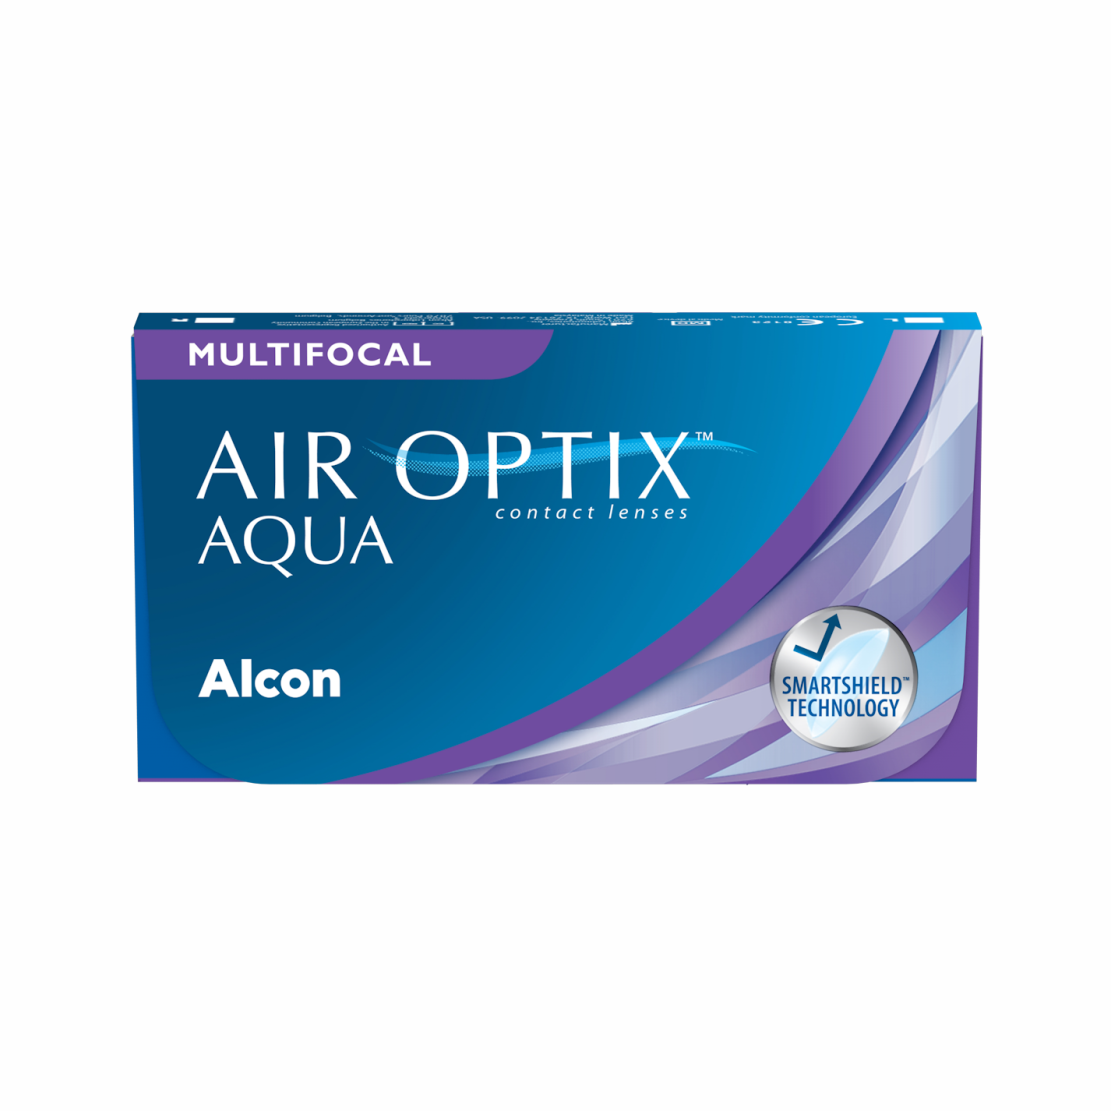 AIR OPTIX Aqua Multifocal, Alcon